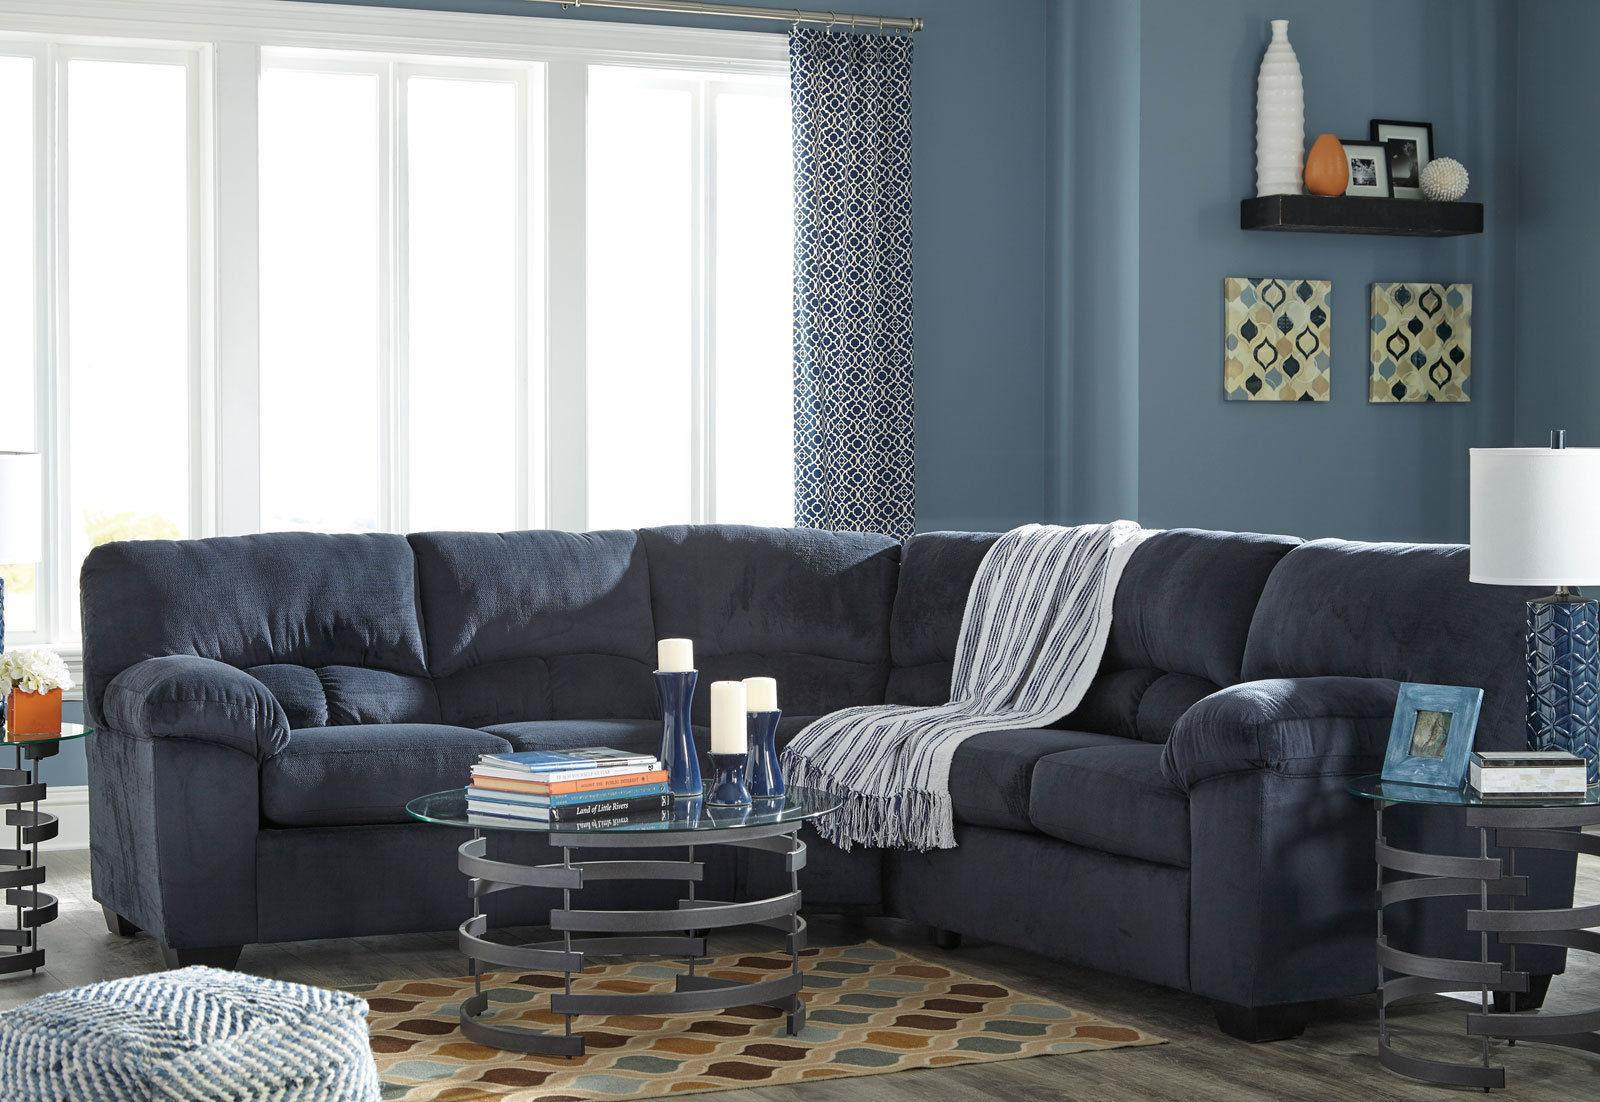 Blue Living Room Chairs
 WESTFIELD Modern Blue Microfiber Living Room Furniture